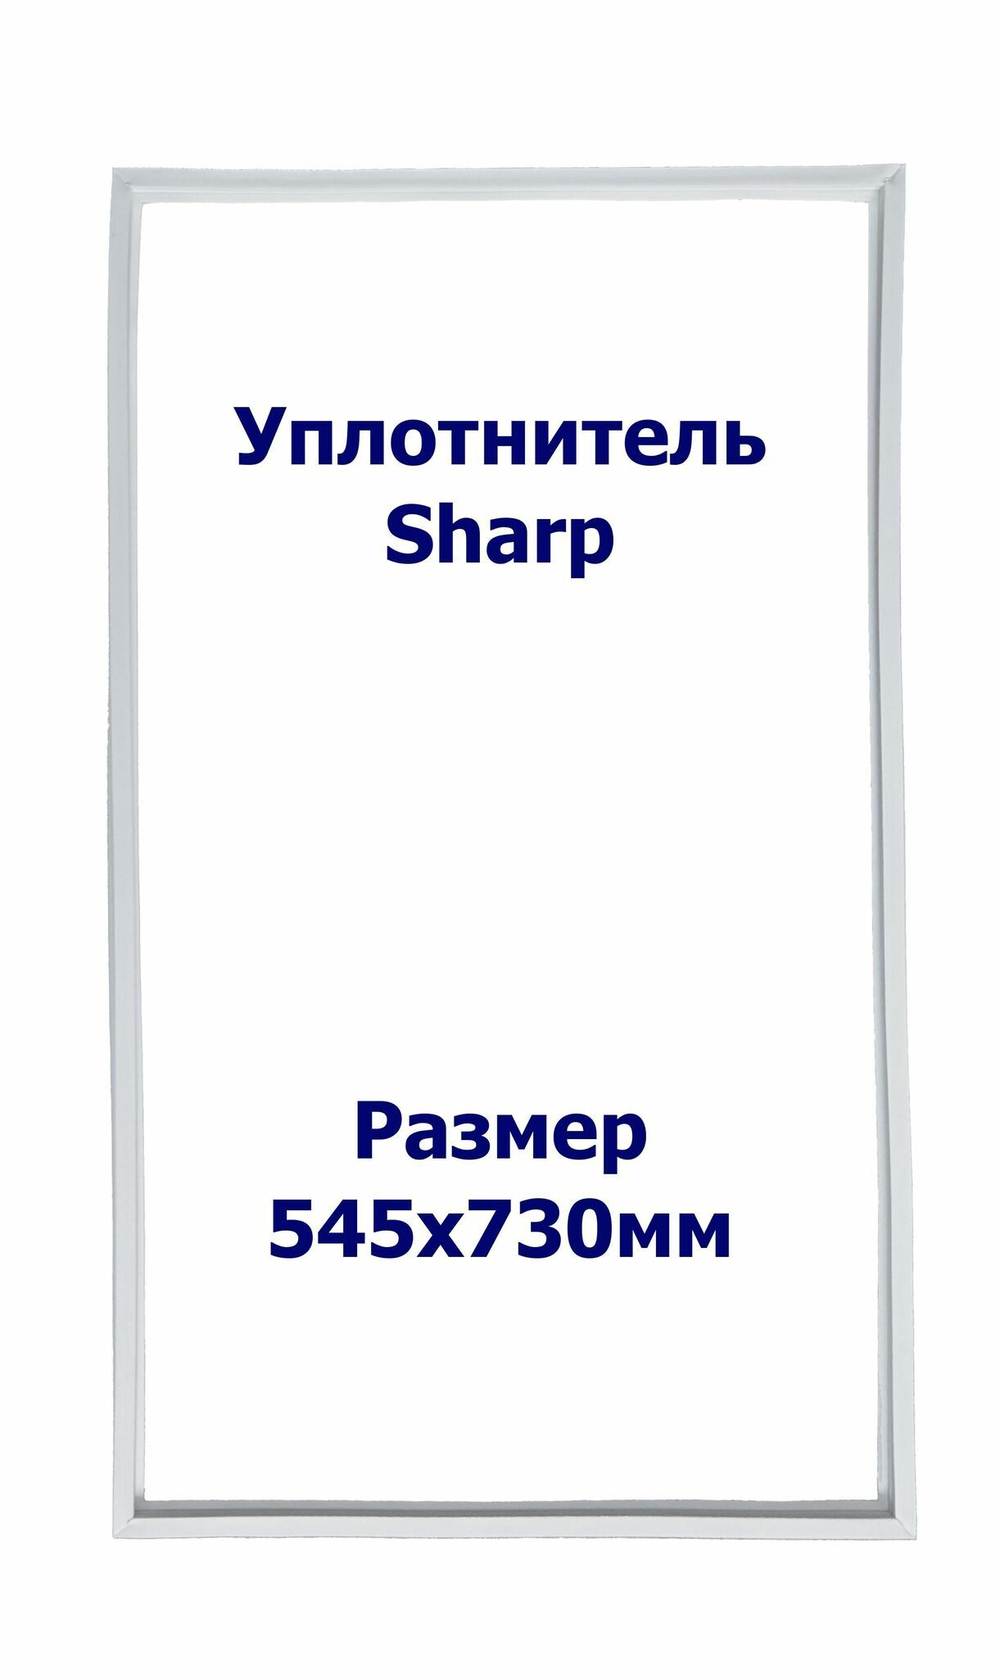 Уплотнитель Sharp SJ -55M-BE. м.к., Размер - 545х730 мм. SK